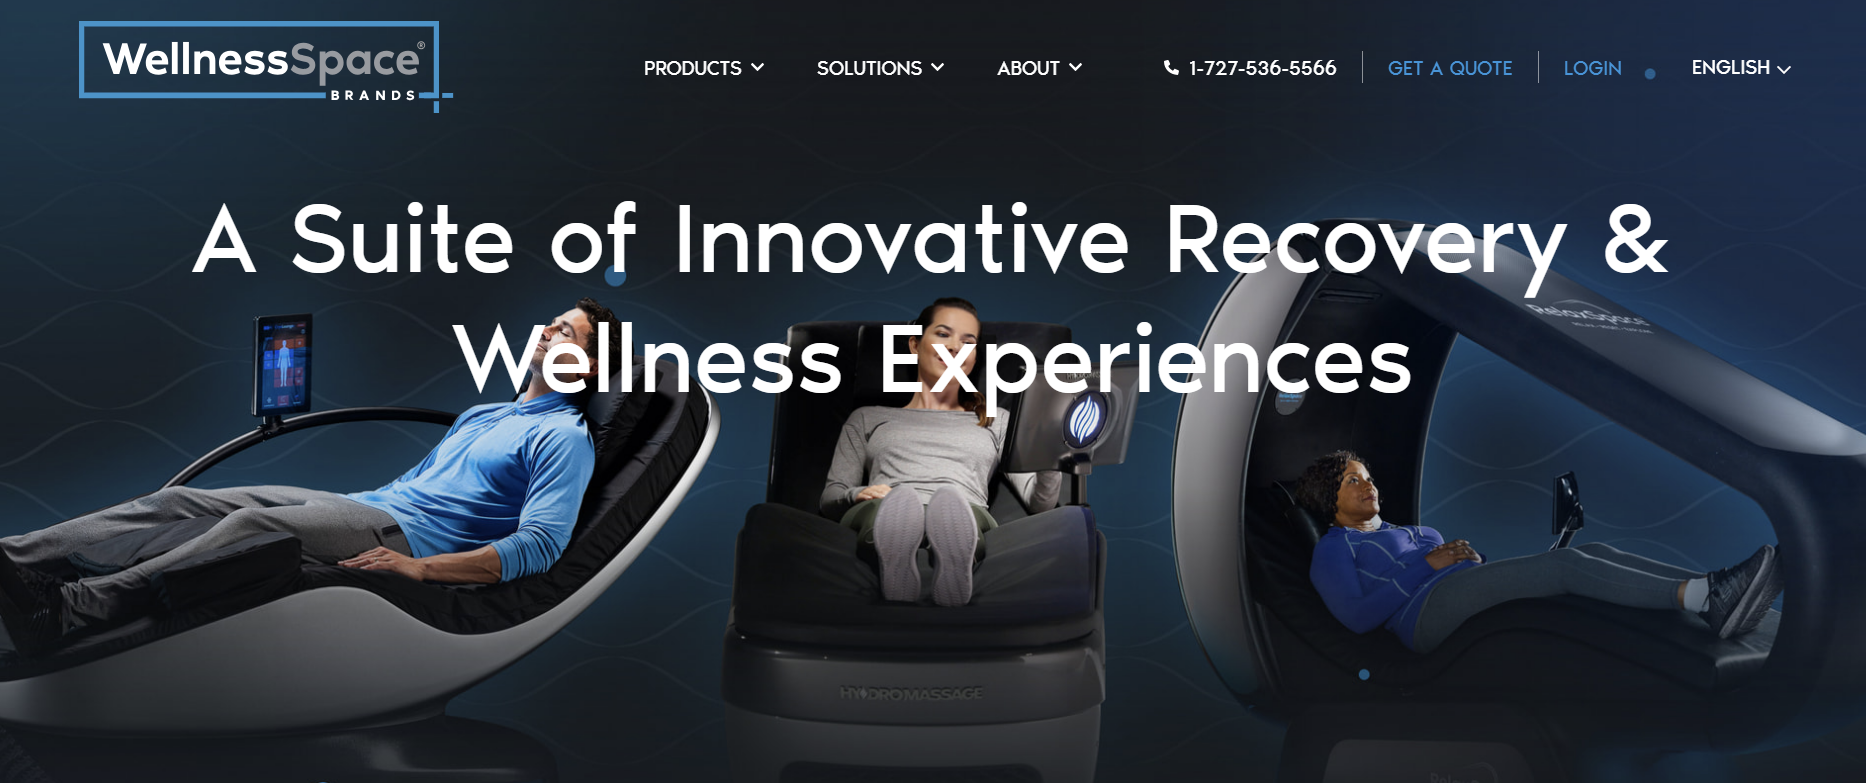 HydroMassage Rebrands to WellnessSpace Brands